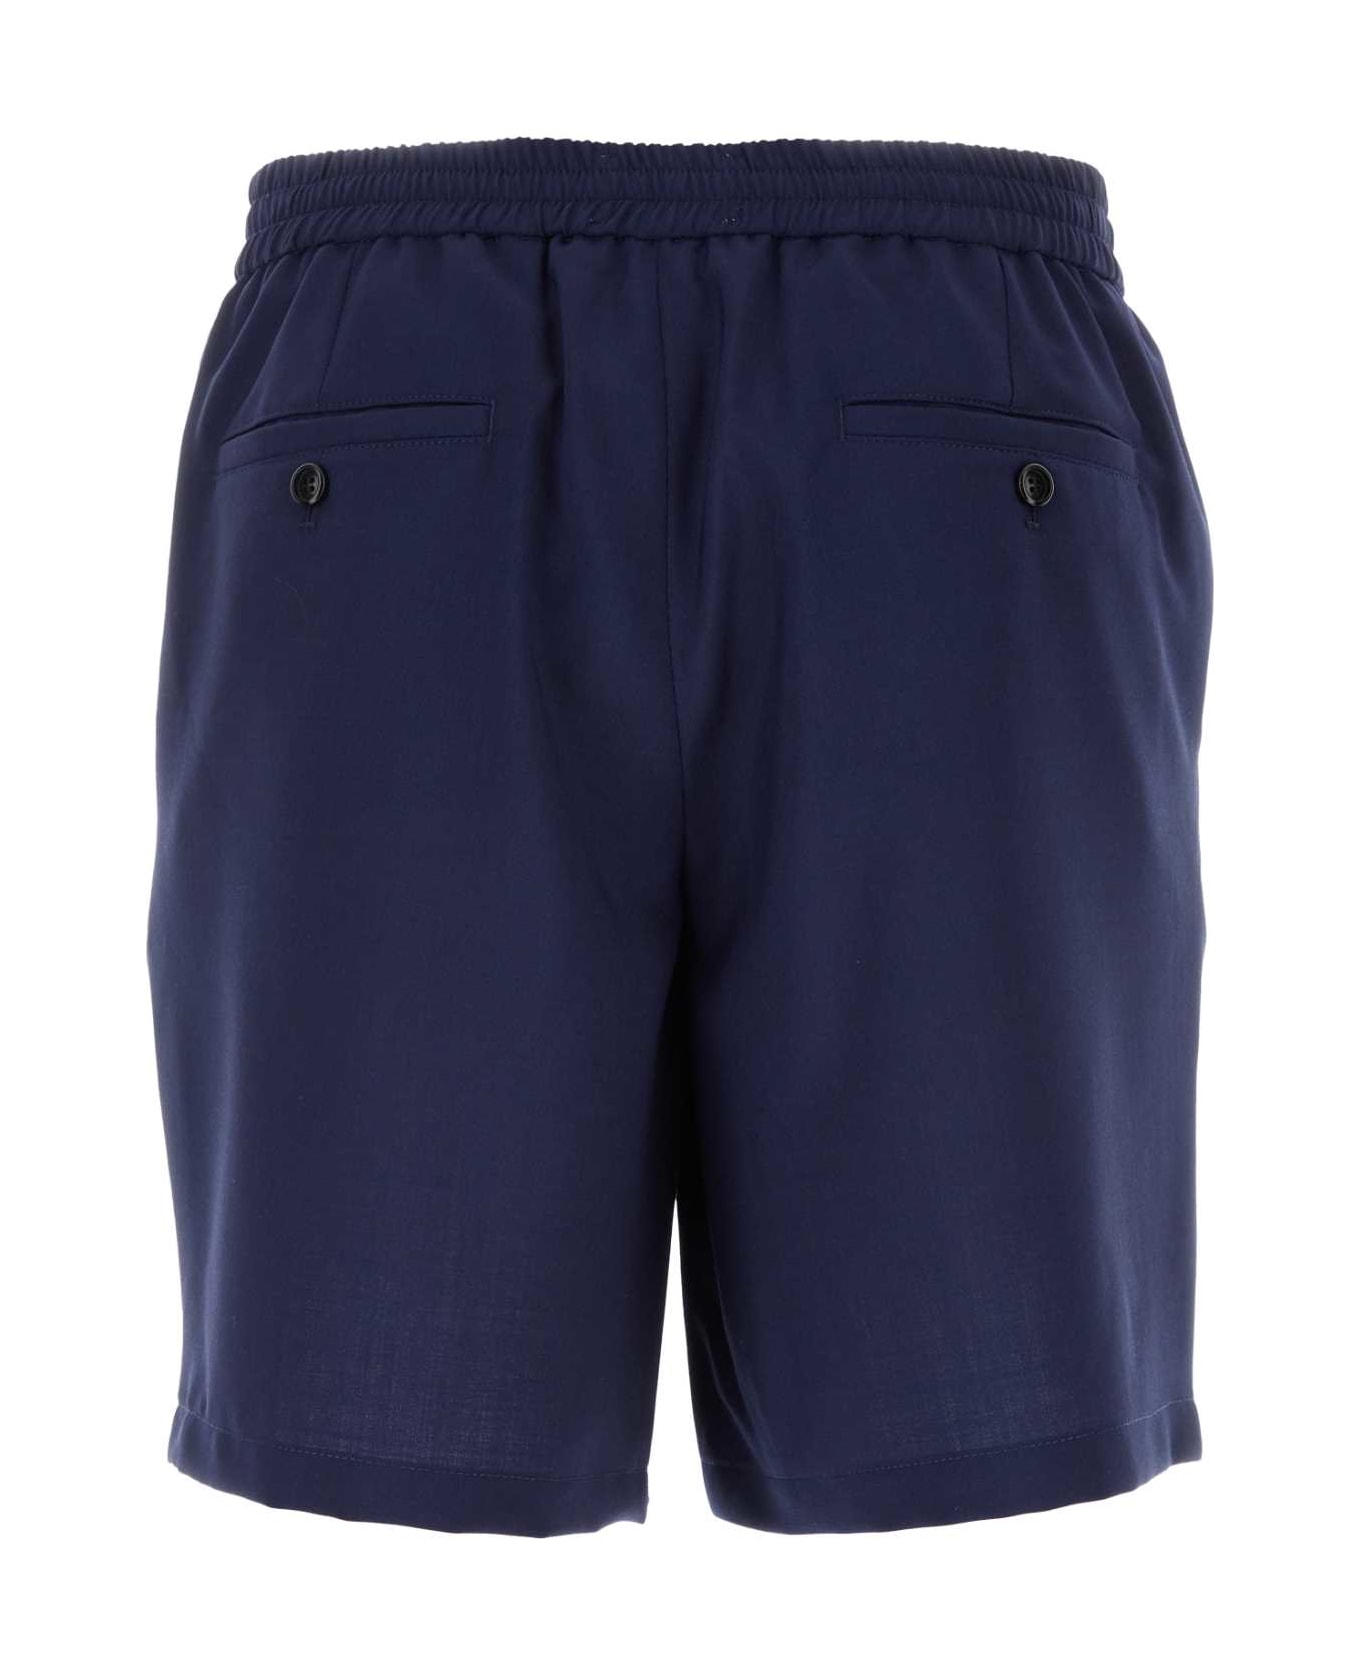 Ami Alexandre Mattiussi Navy Blue Twill Bermuda Shorts - 491 ショートパンツ